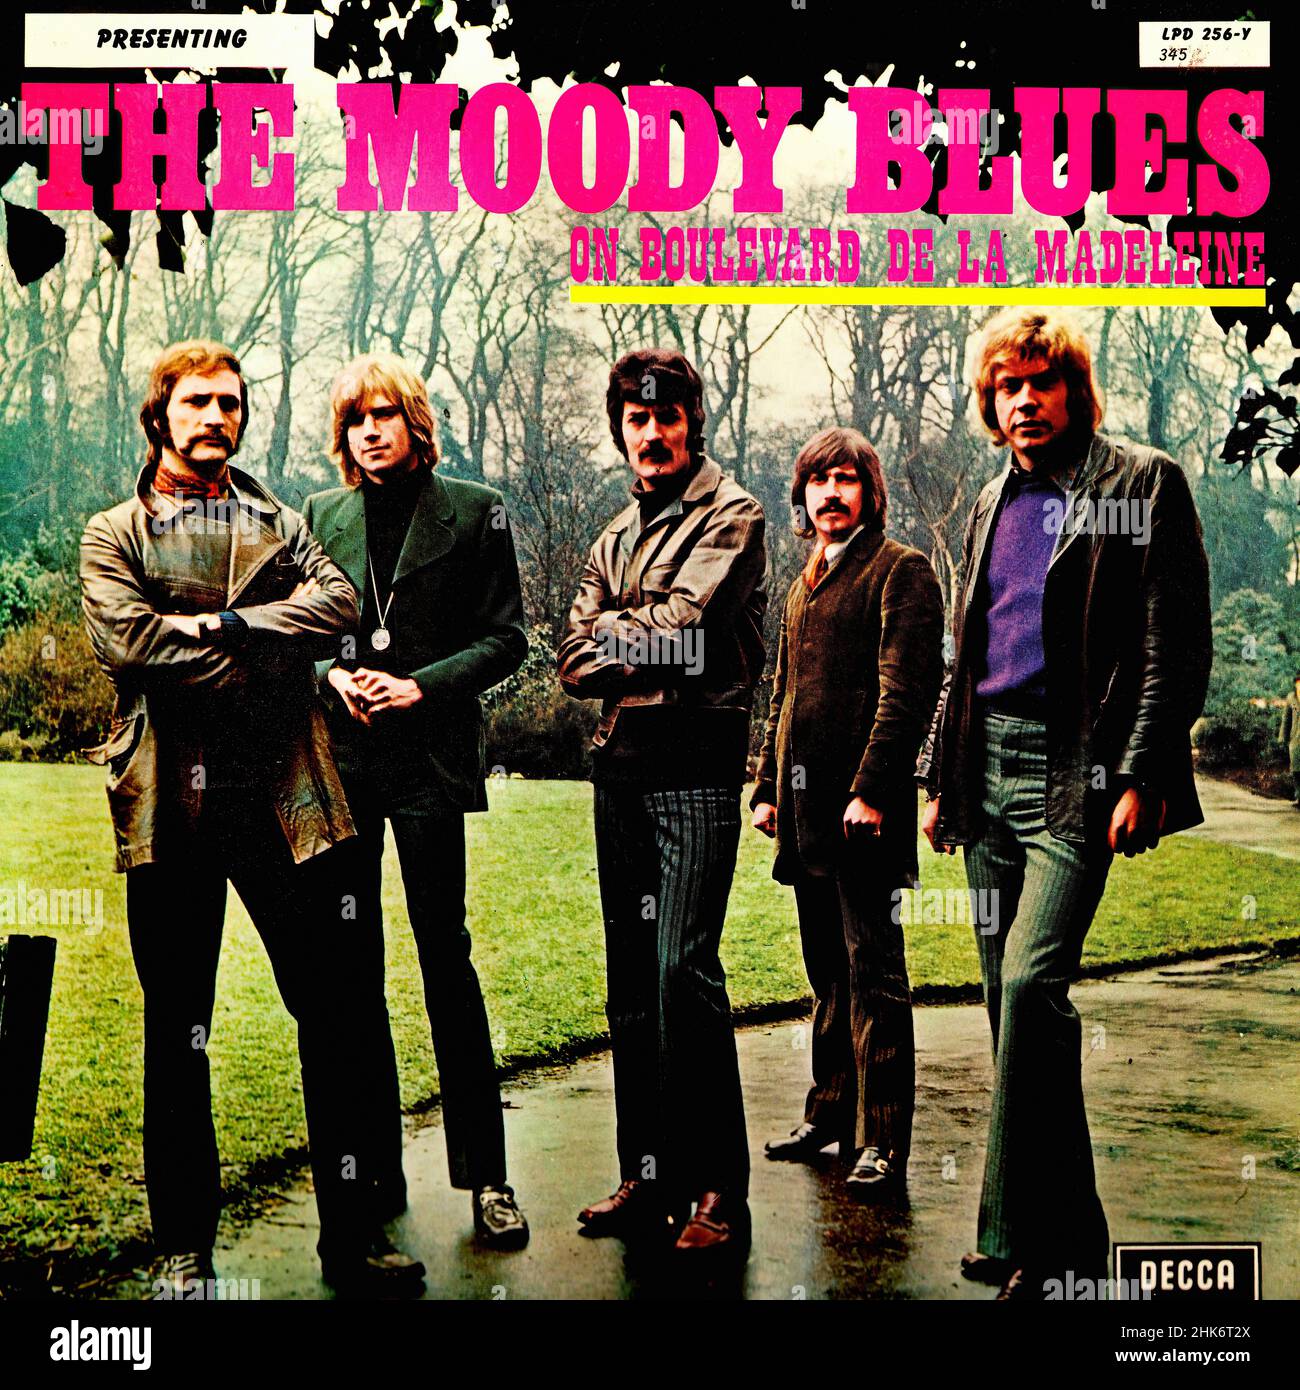 Copertina Vintage vinyl record - Moody Blues, The - su Boulevard De la Madeleine - Belgio - 1969 Foto Stock